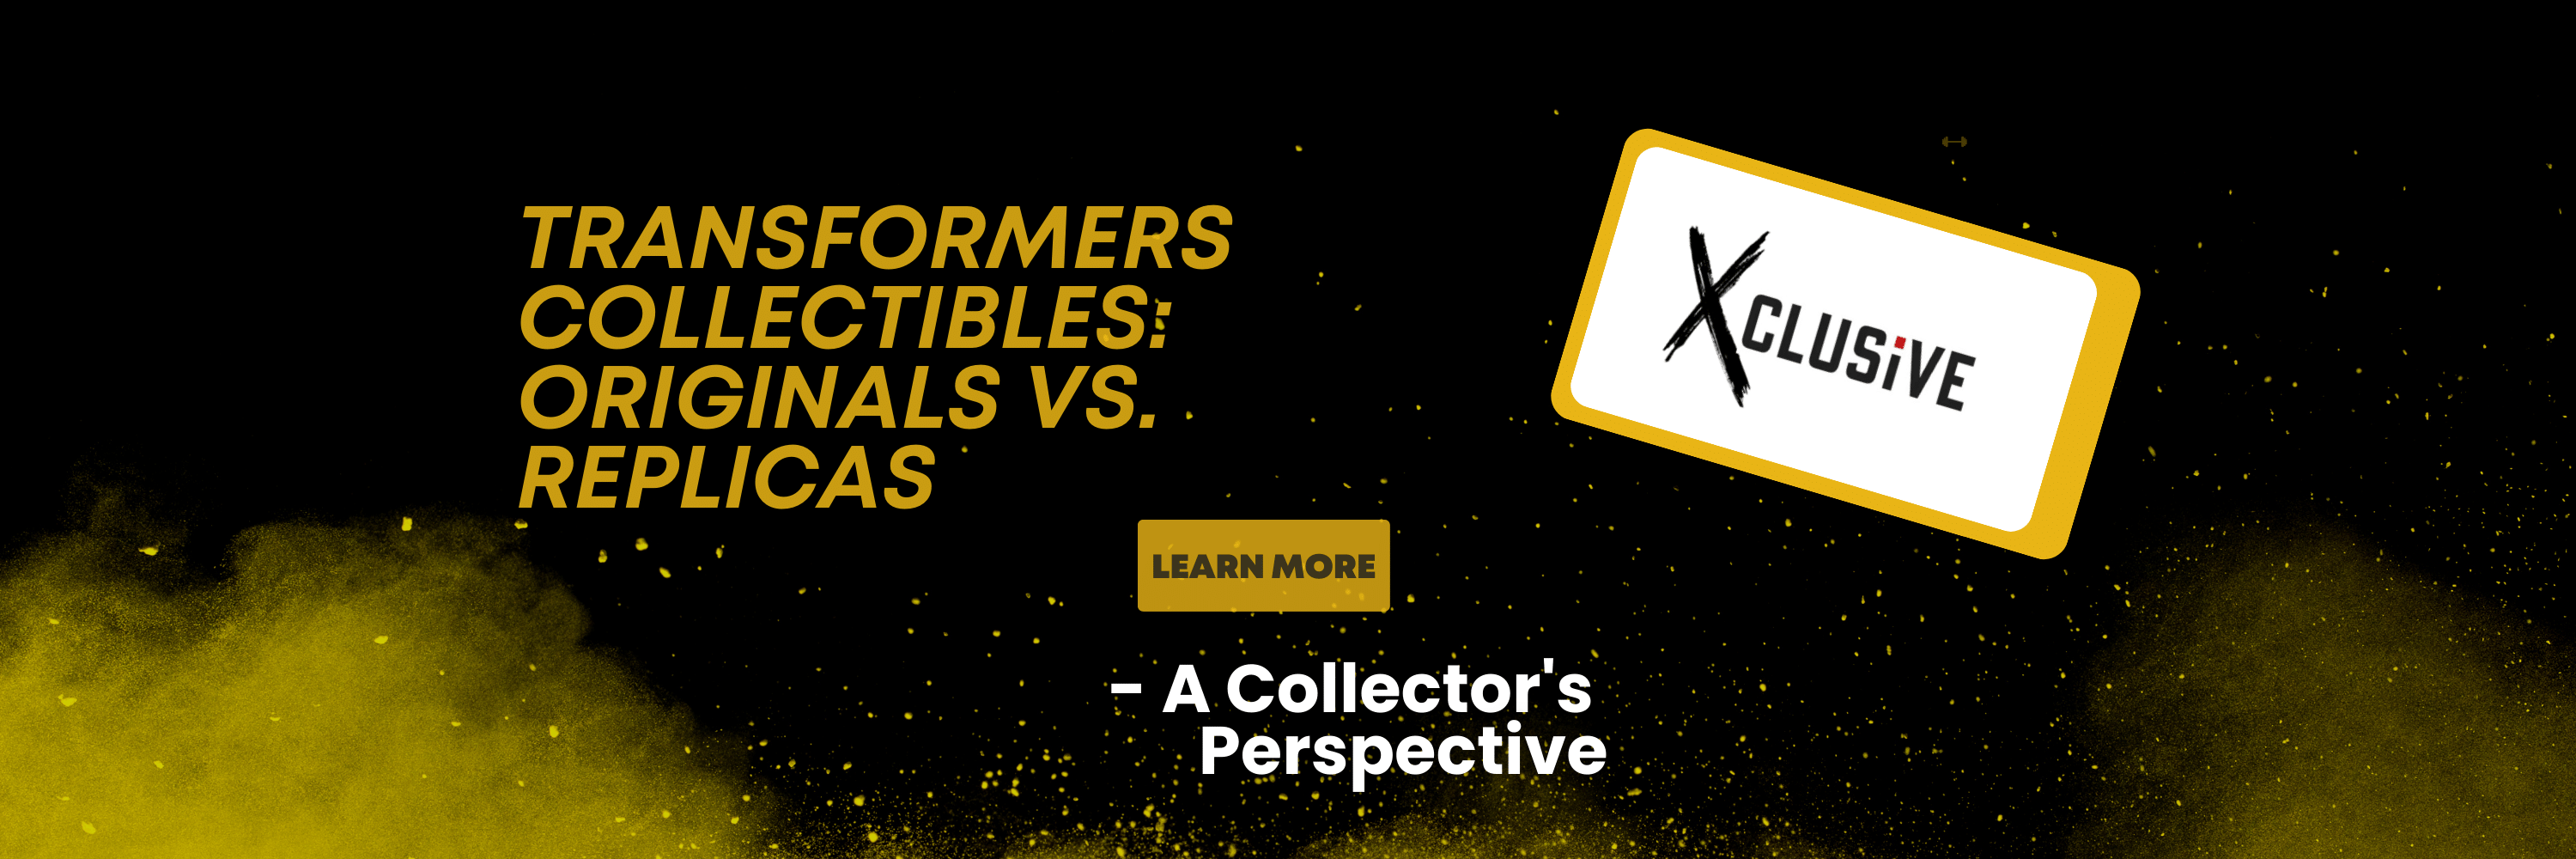 Transformers Collectibles: Originals vs. Replicas - A Collector's Perspective